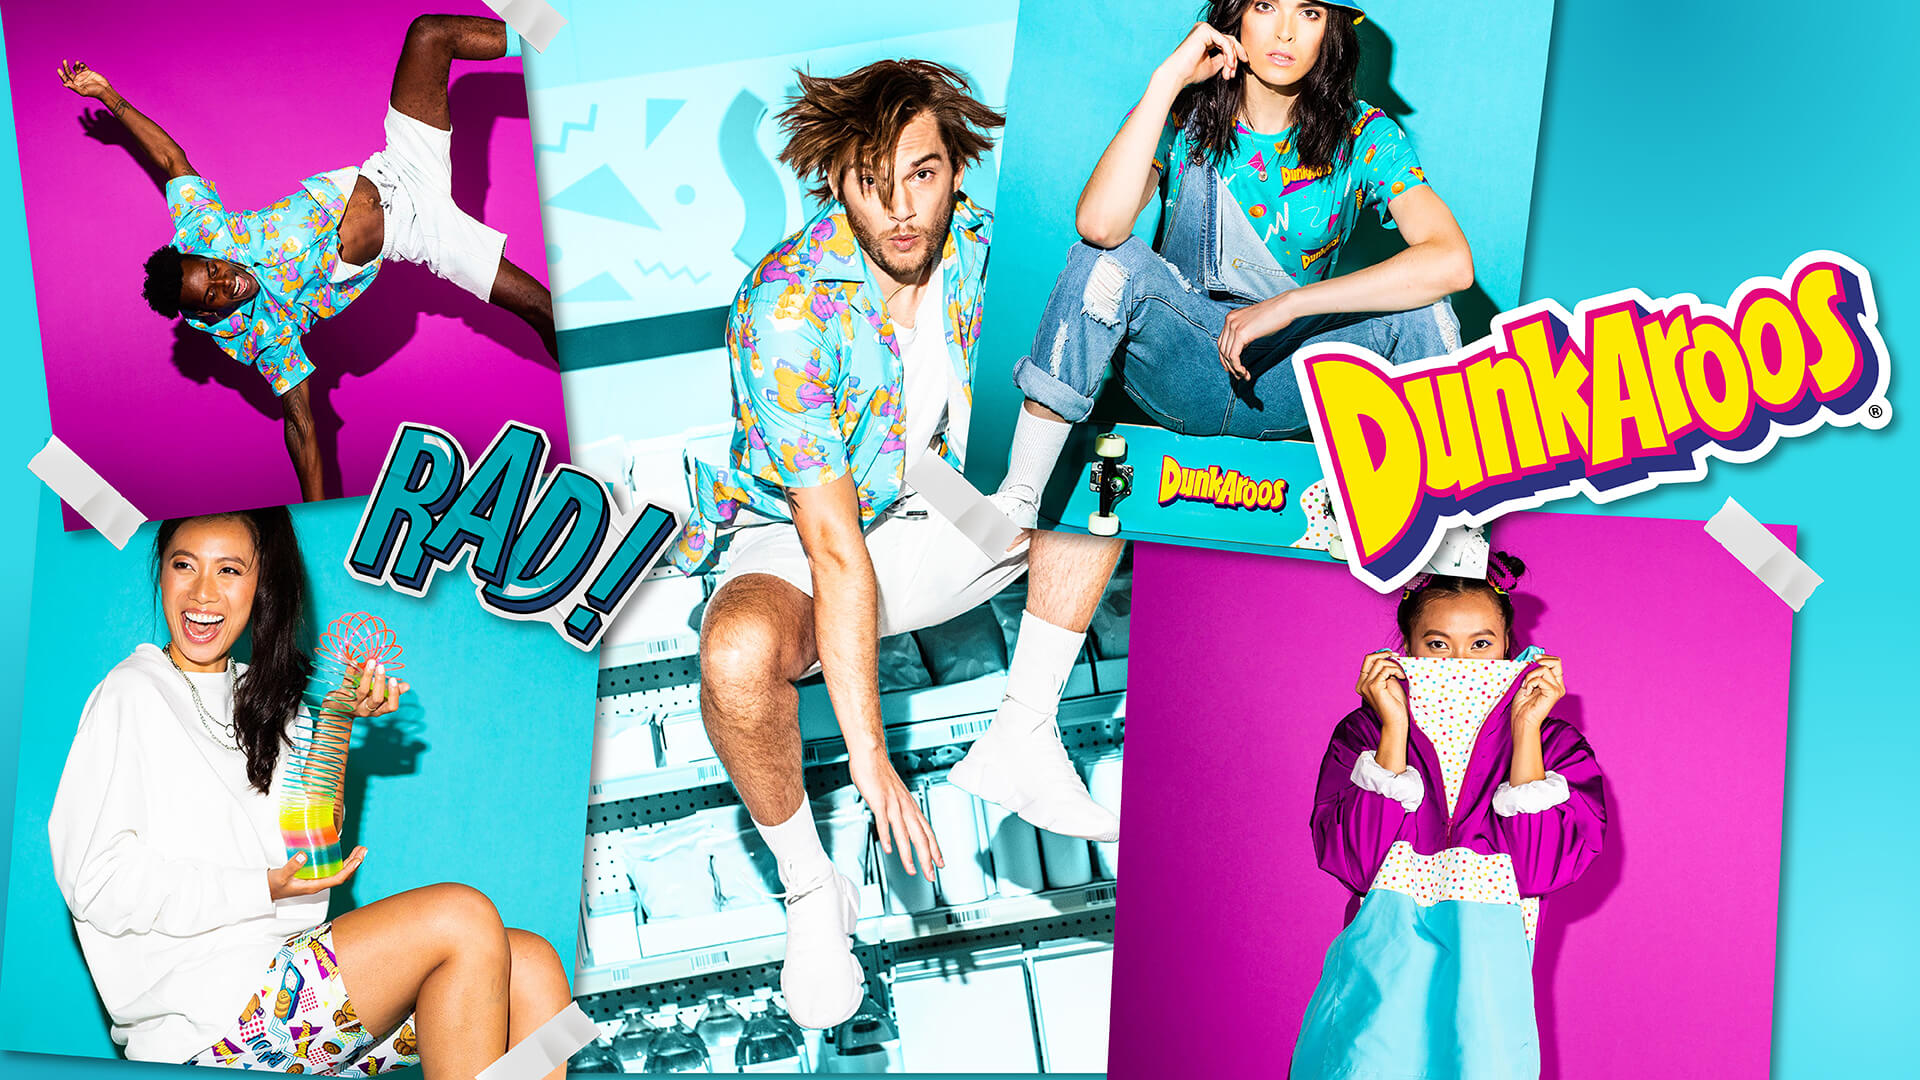 DunkAroos collage of 5 individuals wearing DunkAroos merchandise.